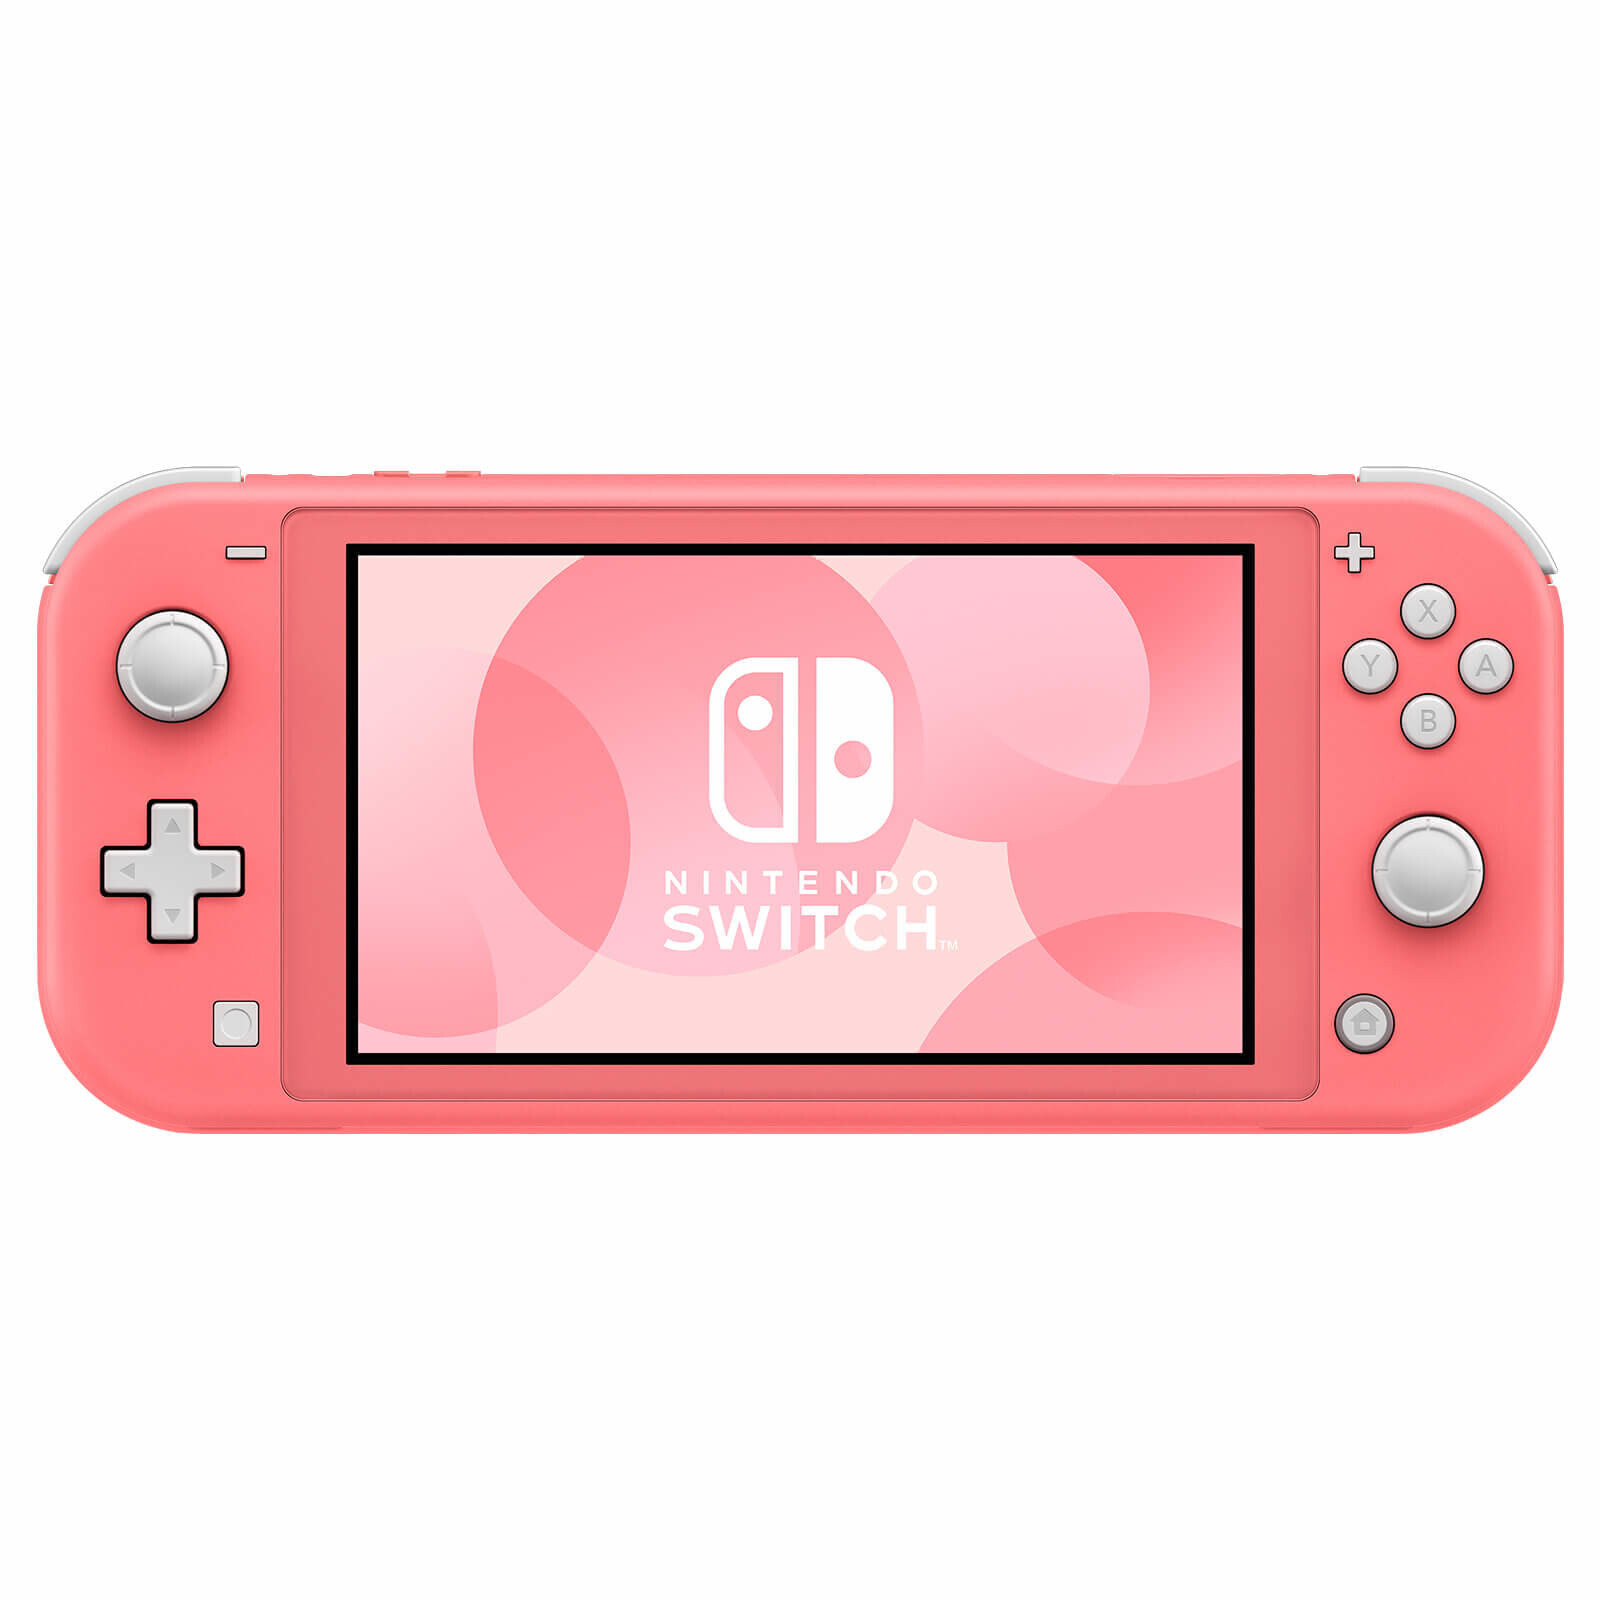 Nintendo Switch Lite (Coral) Animal Crossing: New Horizons Pack + NSO 3 months (Limited) портативная игровая приставка Коралловый 14 cm (5.5